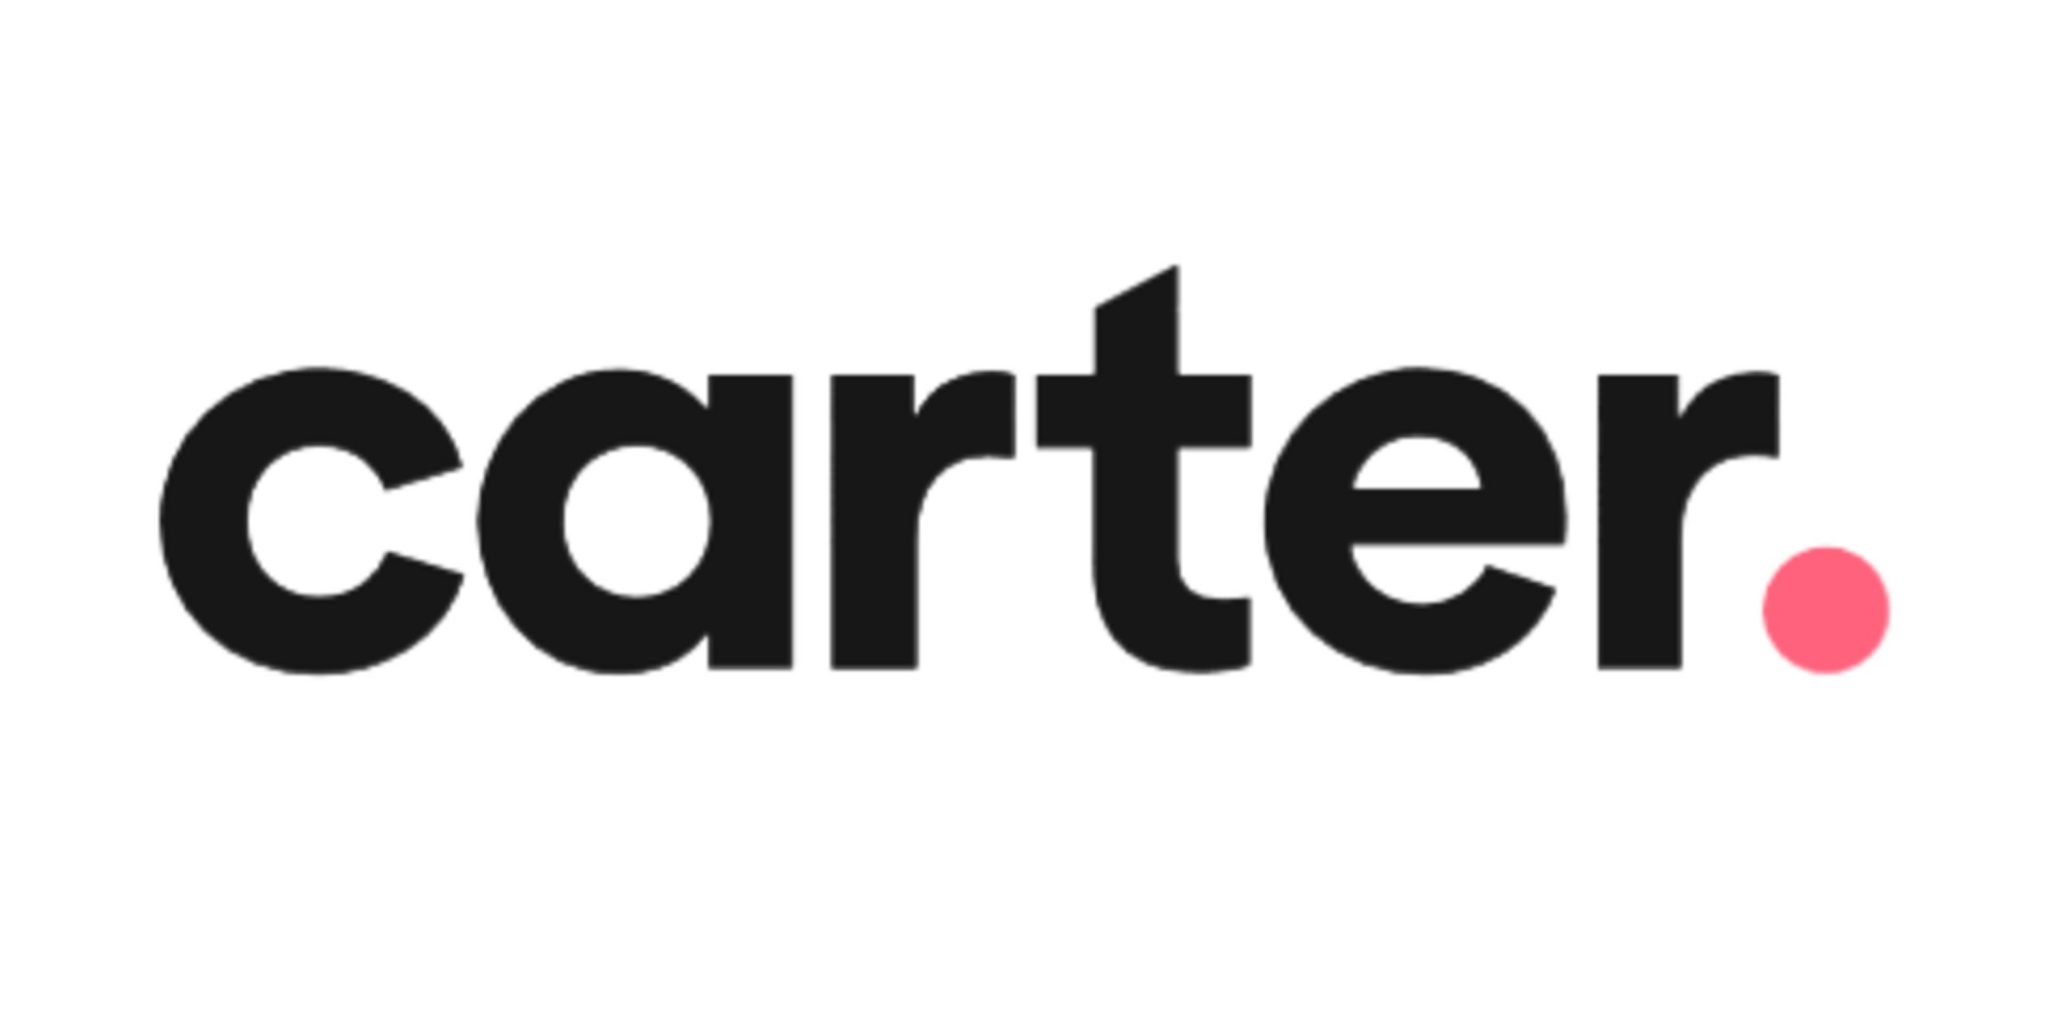 Carter Real Estate Logo